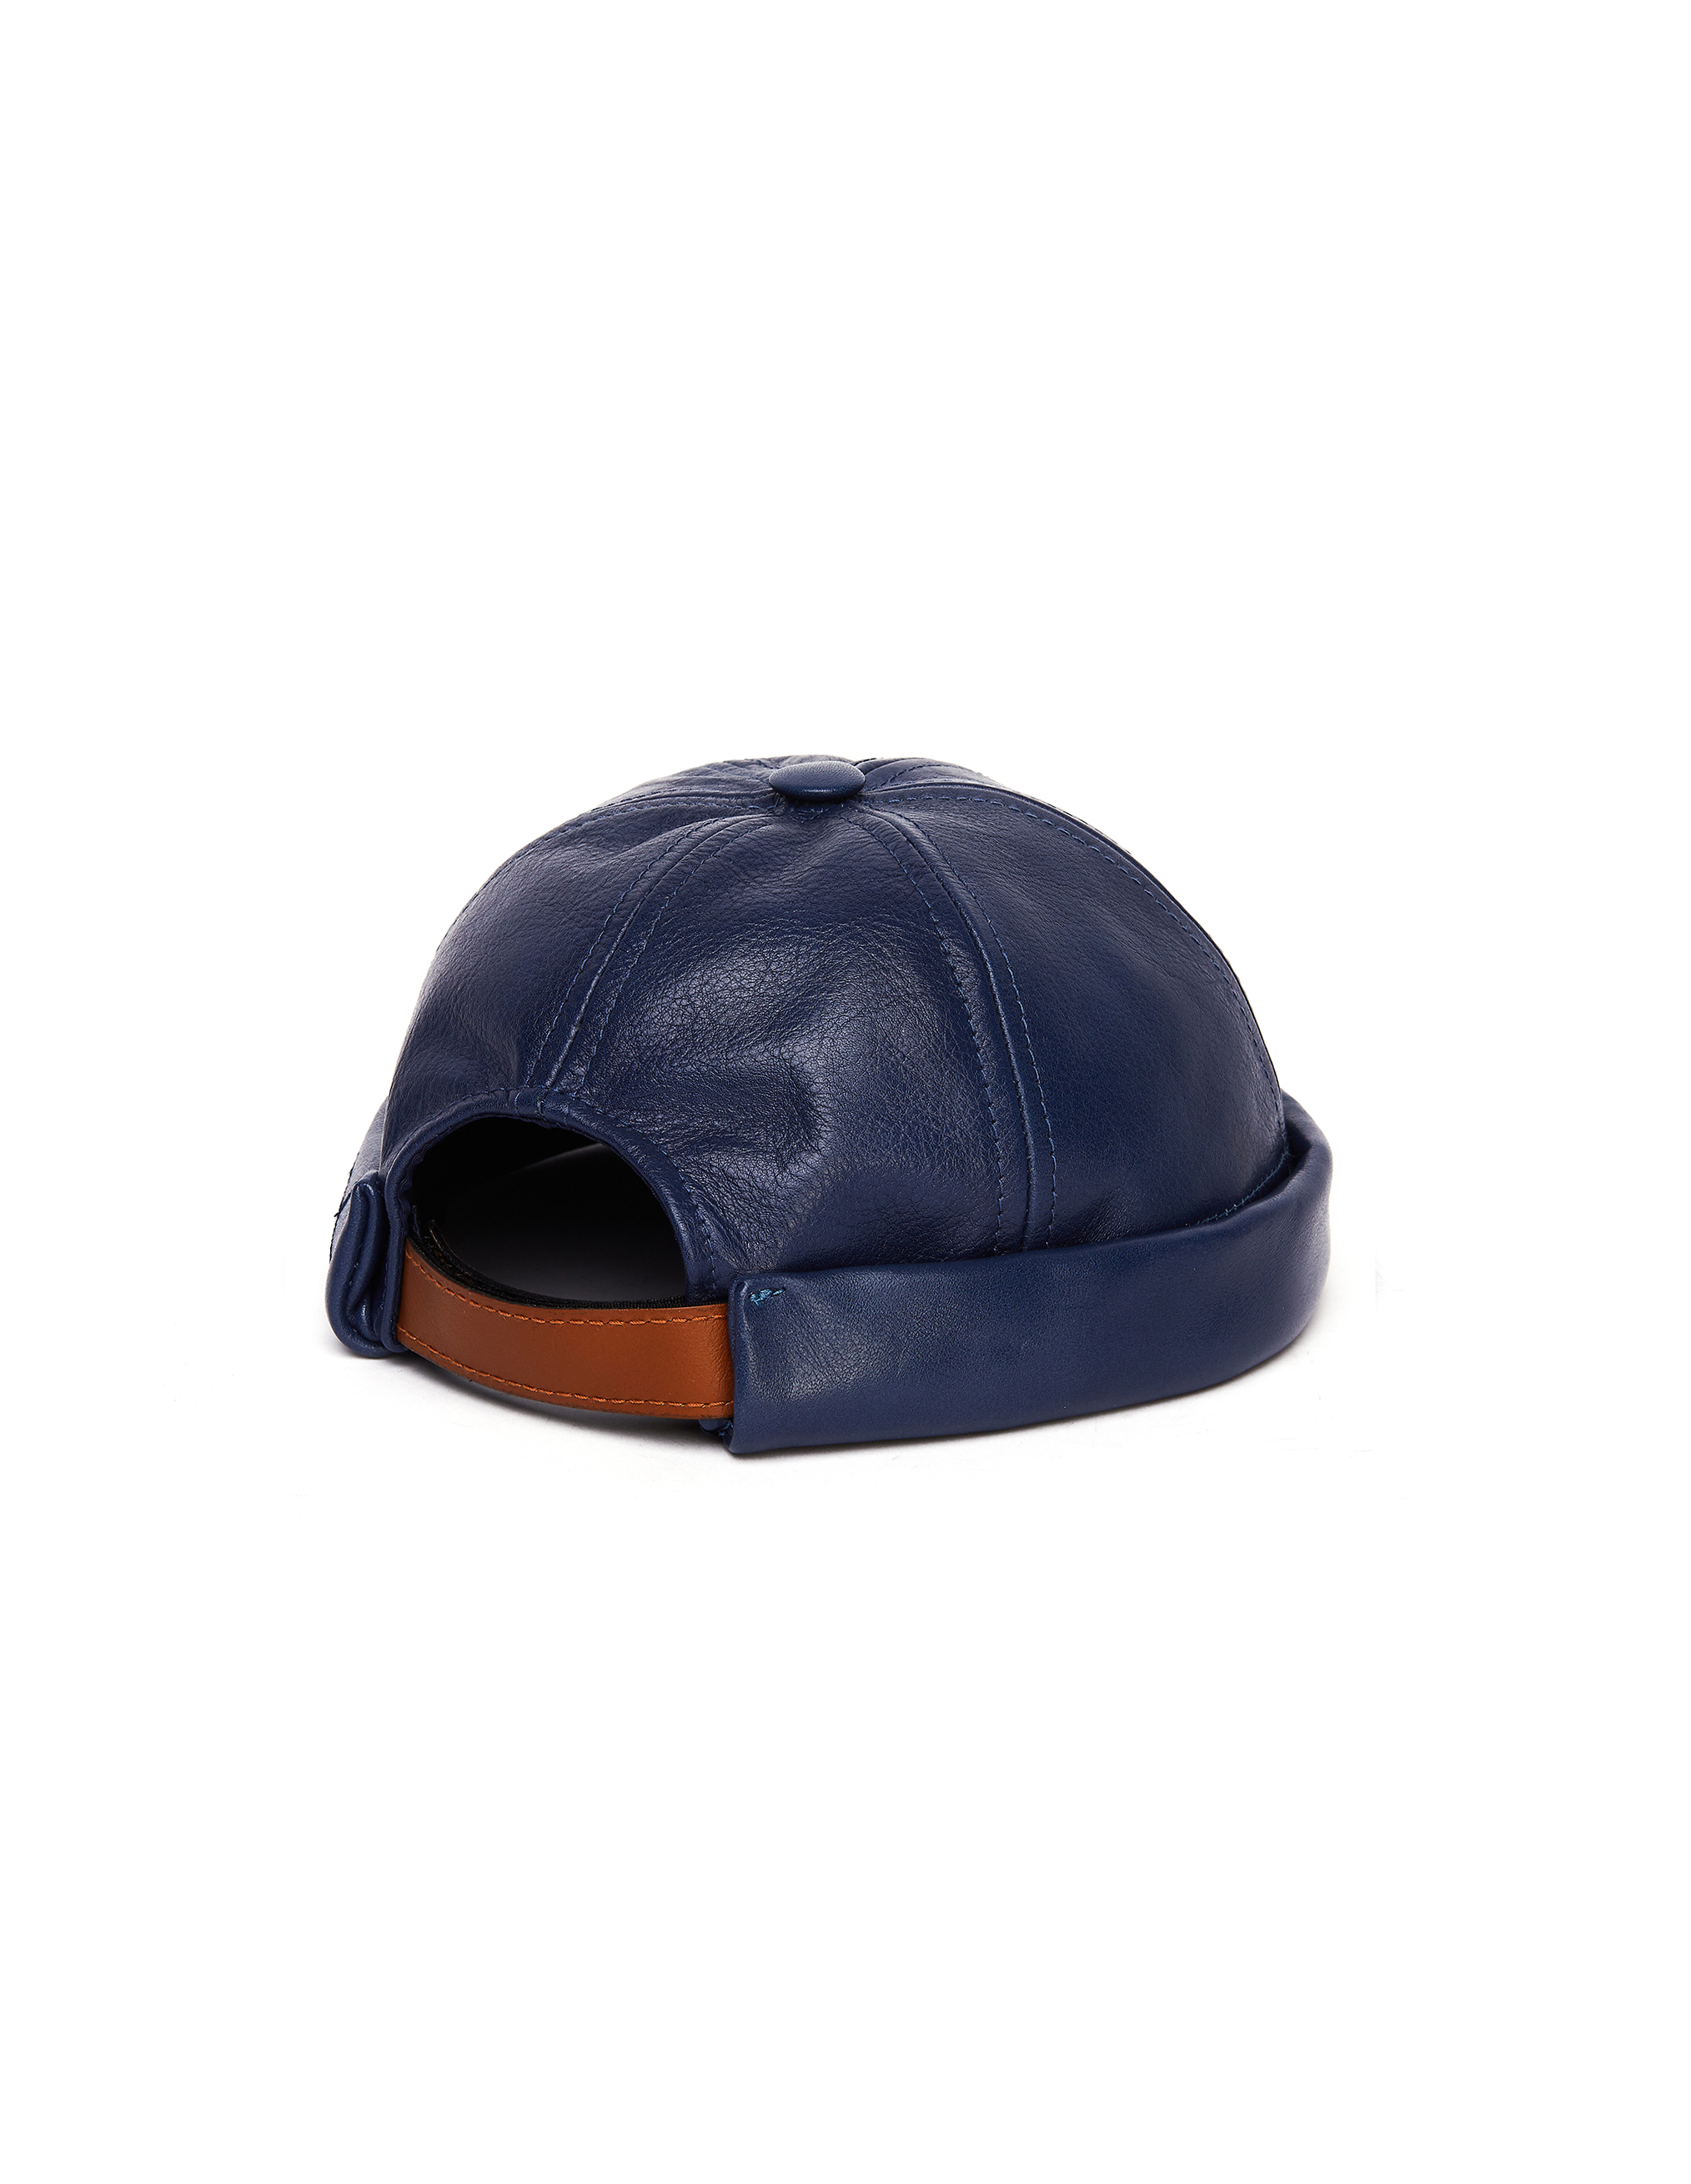 Синяя кожаная шапка Beton Cire Comme des Garcons CdG WF-K601-051-3, размер One Size - фото 2